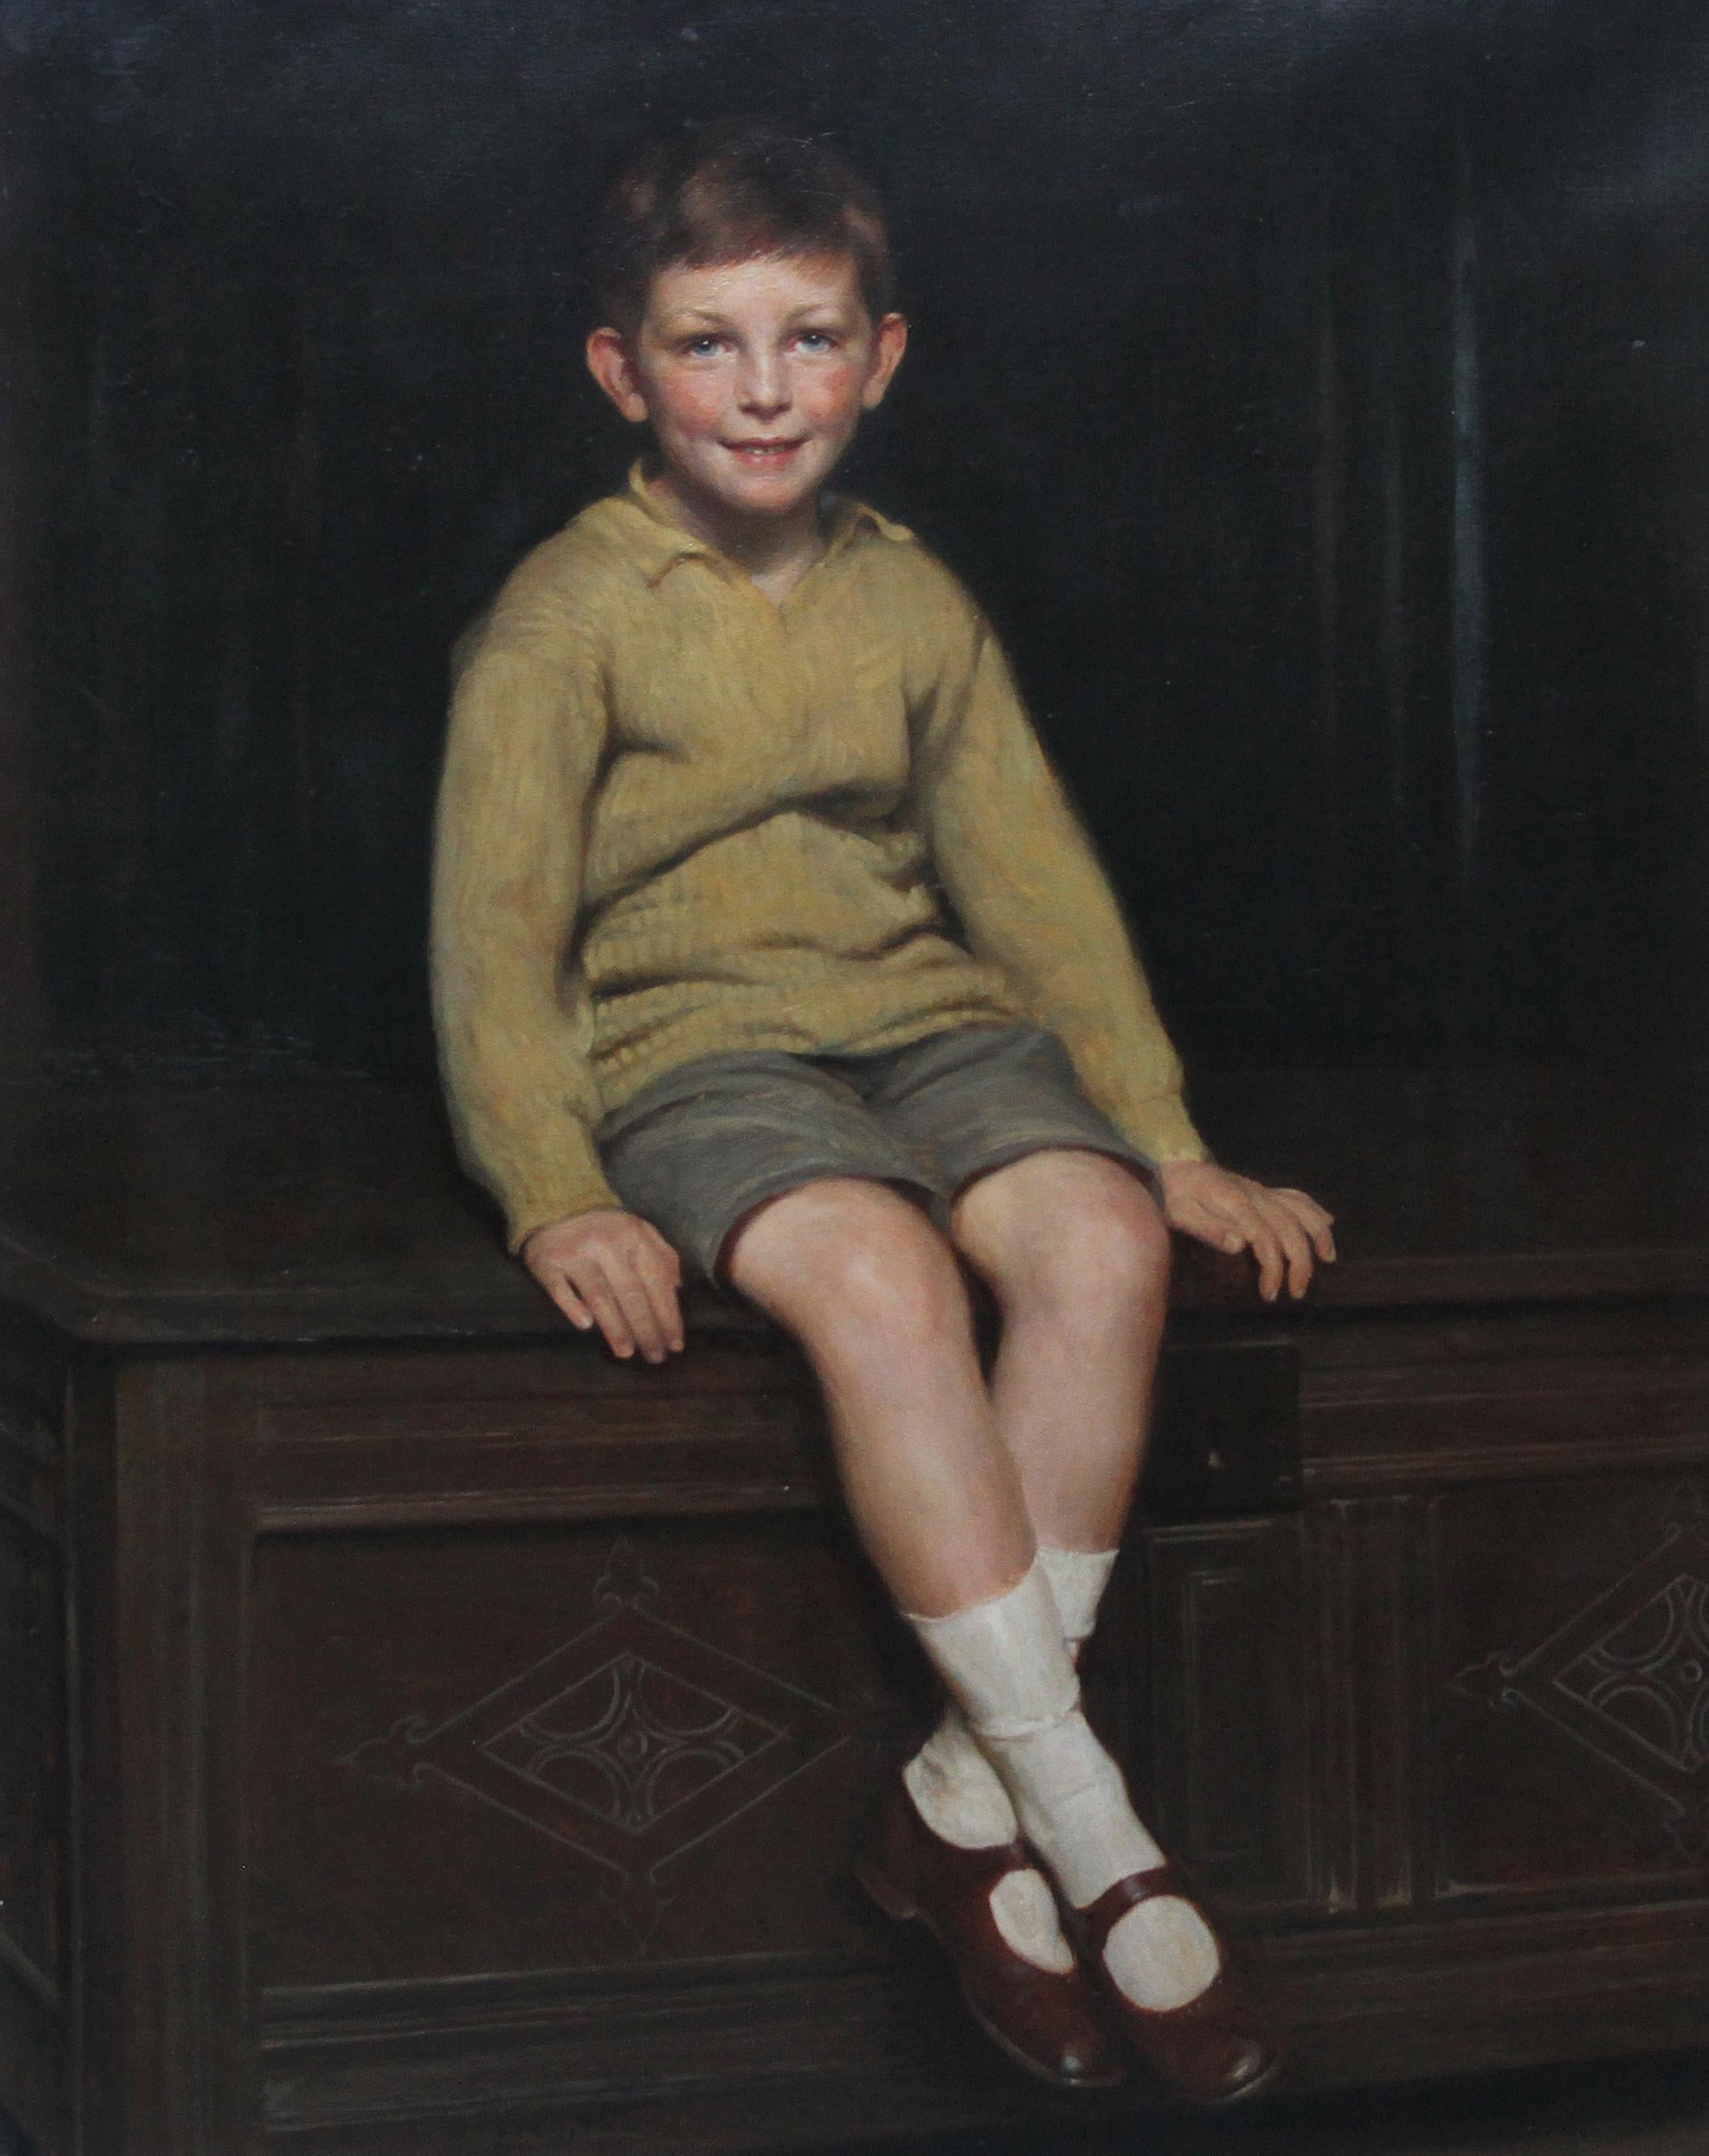 Portrait of Art Deco Boy - British 20's art realist child portrait oil painting  - Painting by Frank Percy Wild